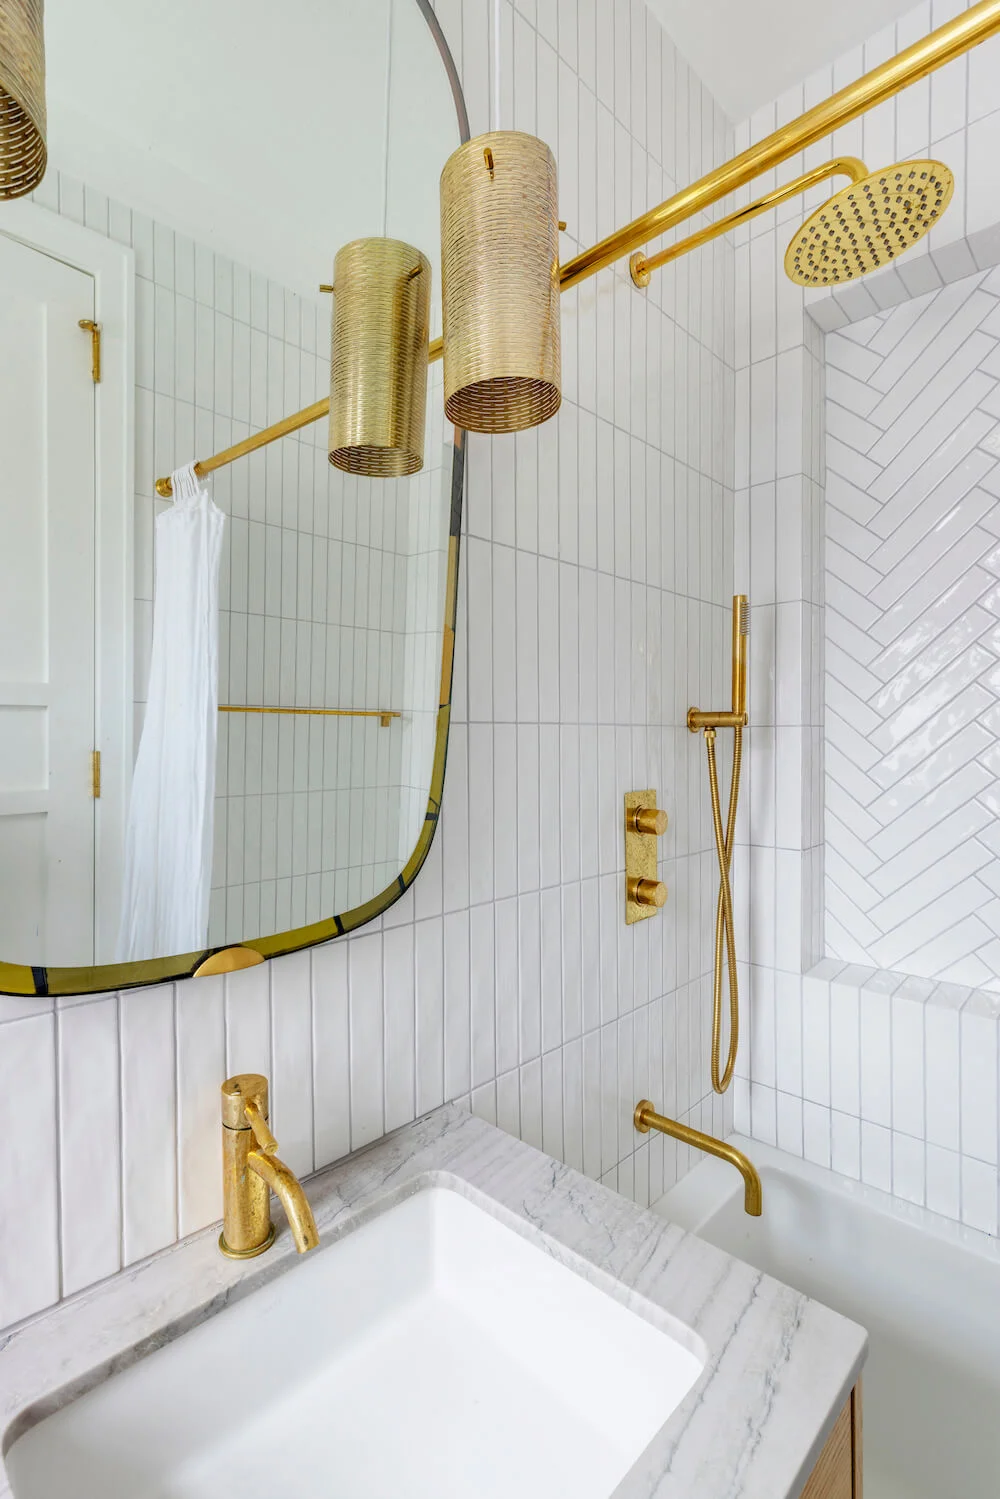 bathroom remodel with subway tile in vertical bond stack and herringbone